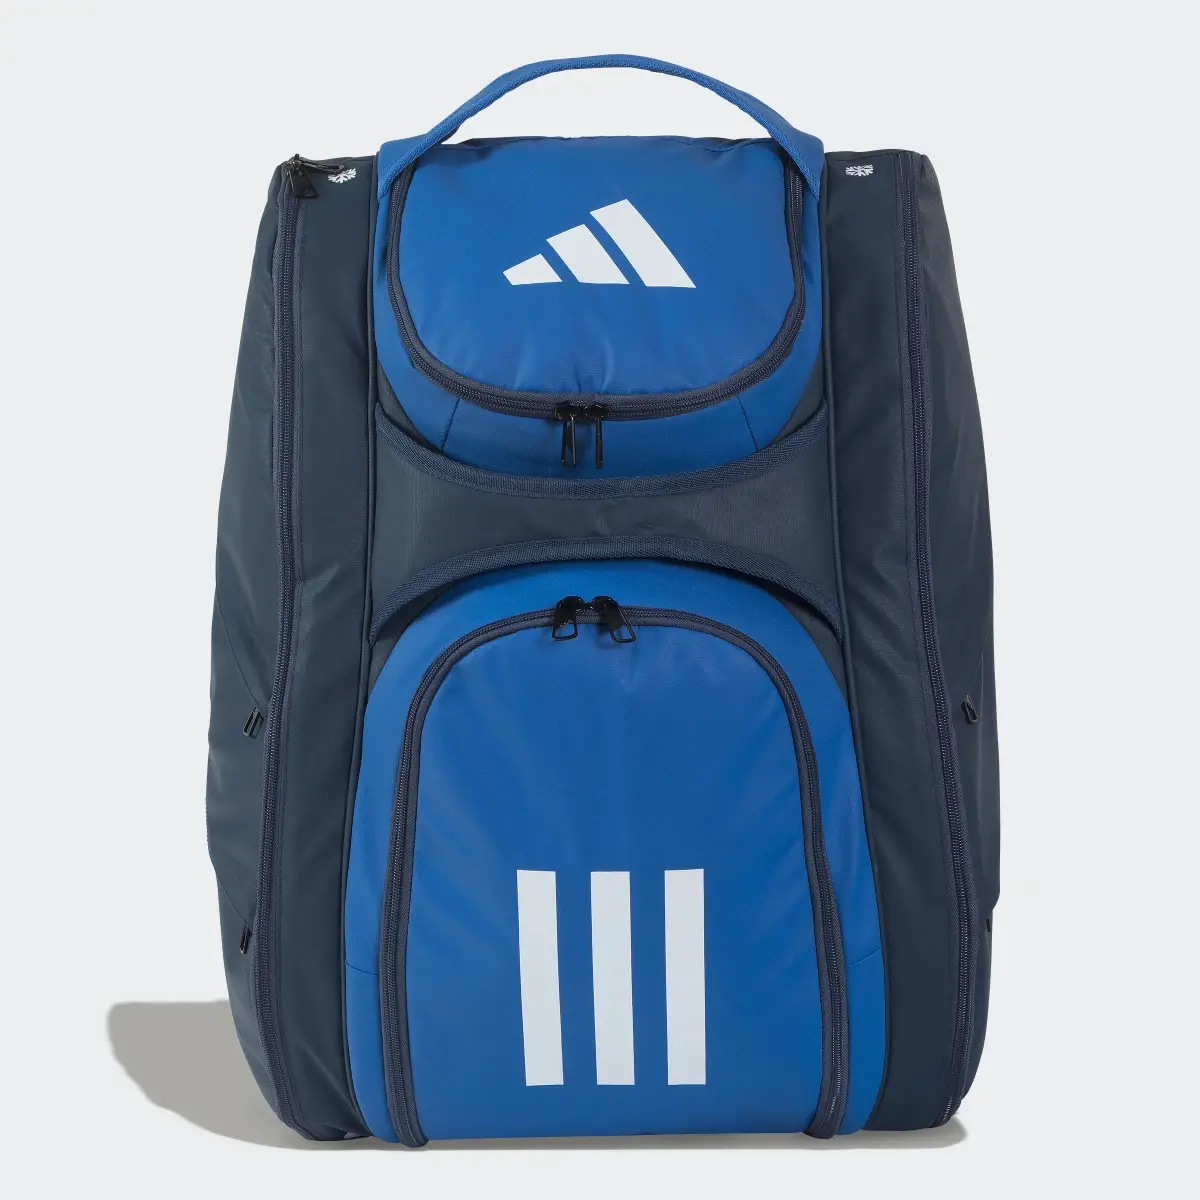 Adidas Multigame Racket Bag. 1